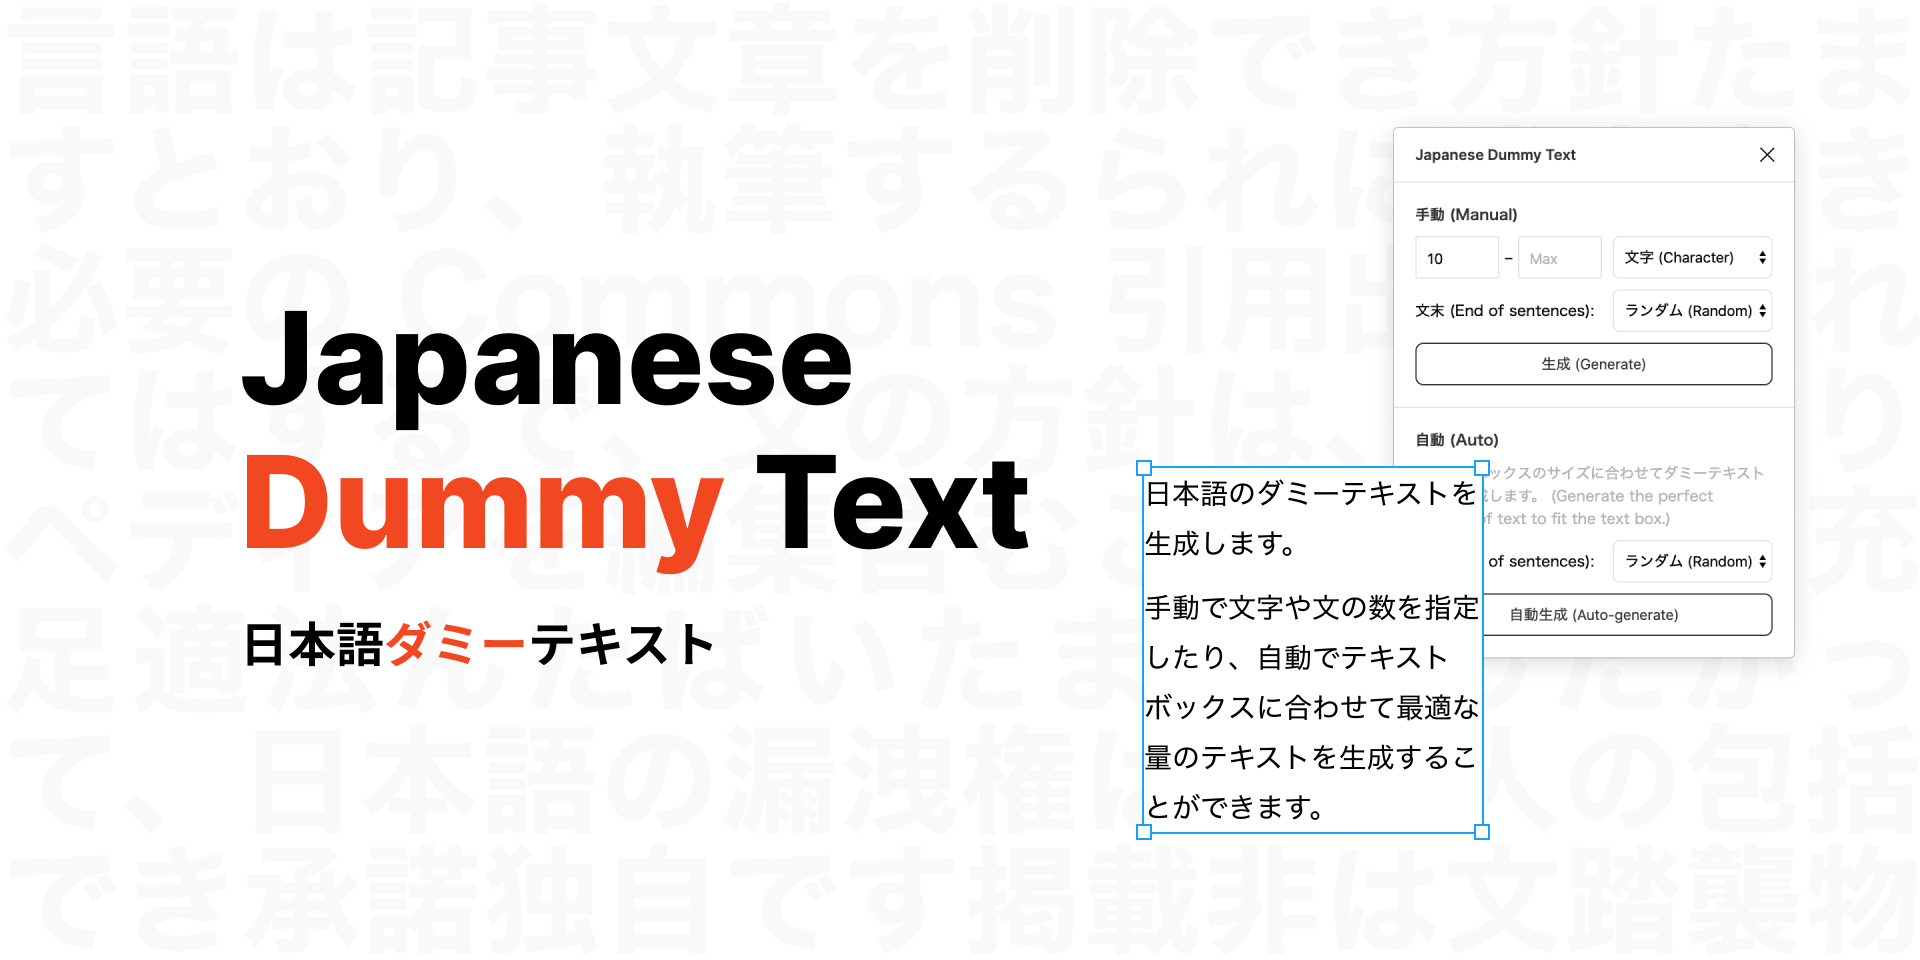 Japanese Dummy Text